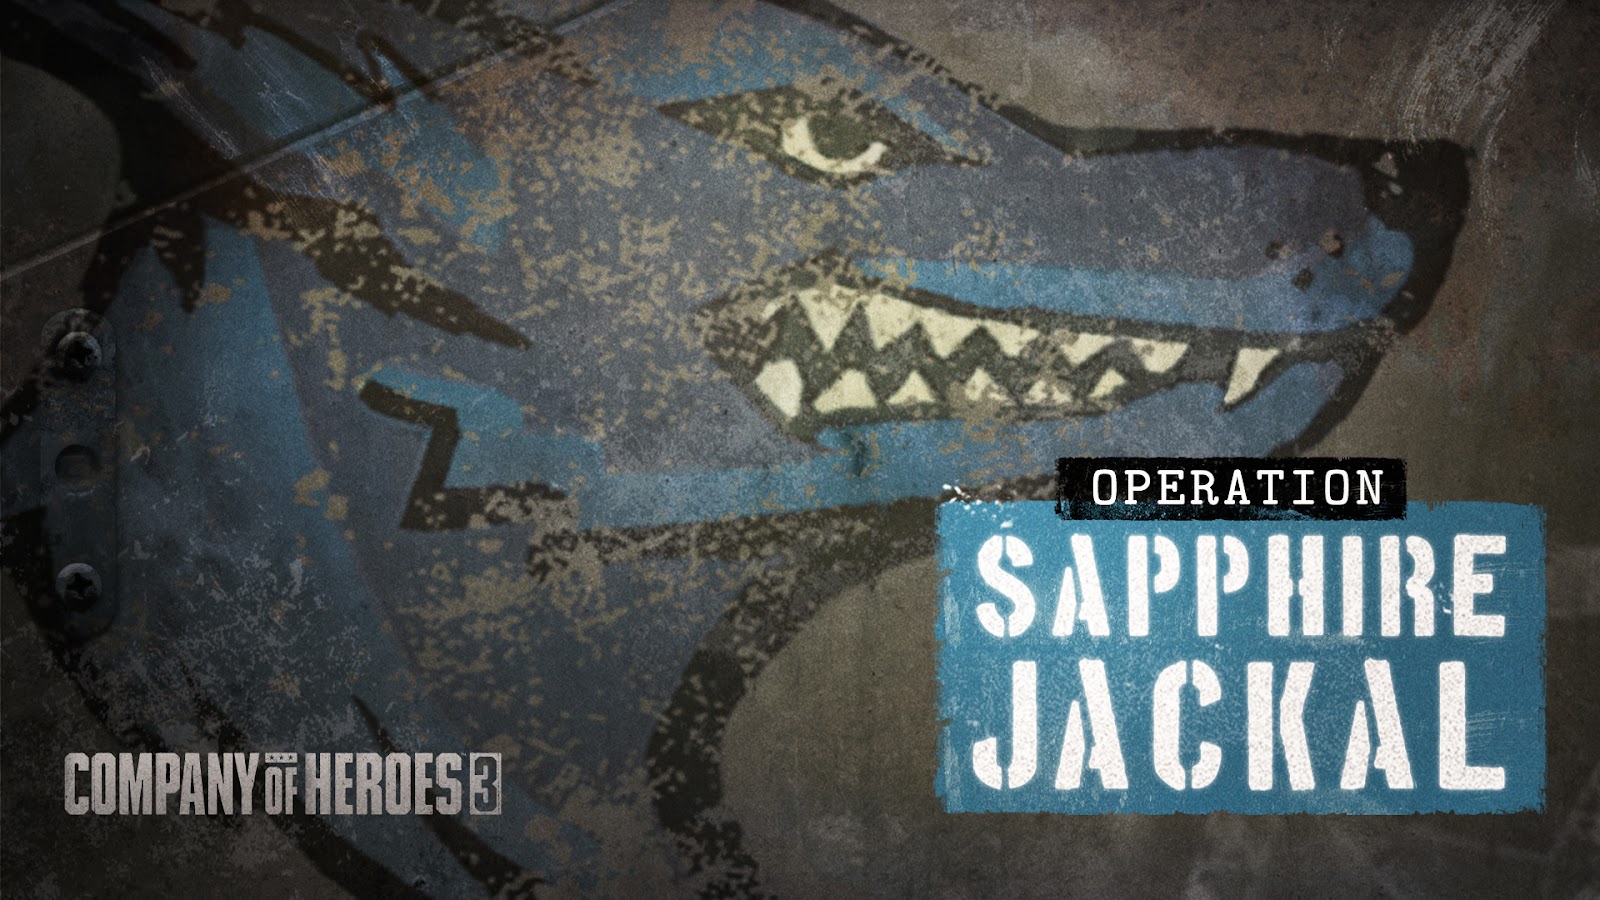 Sapphire-jackal 1920x1080px